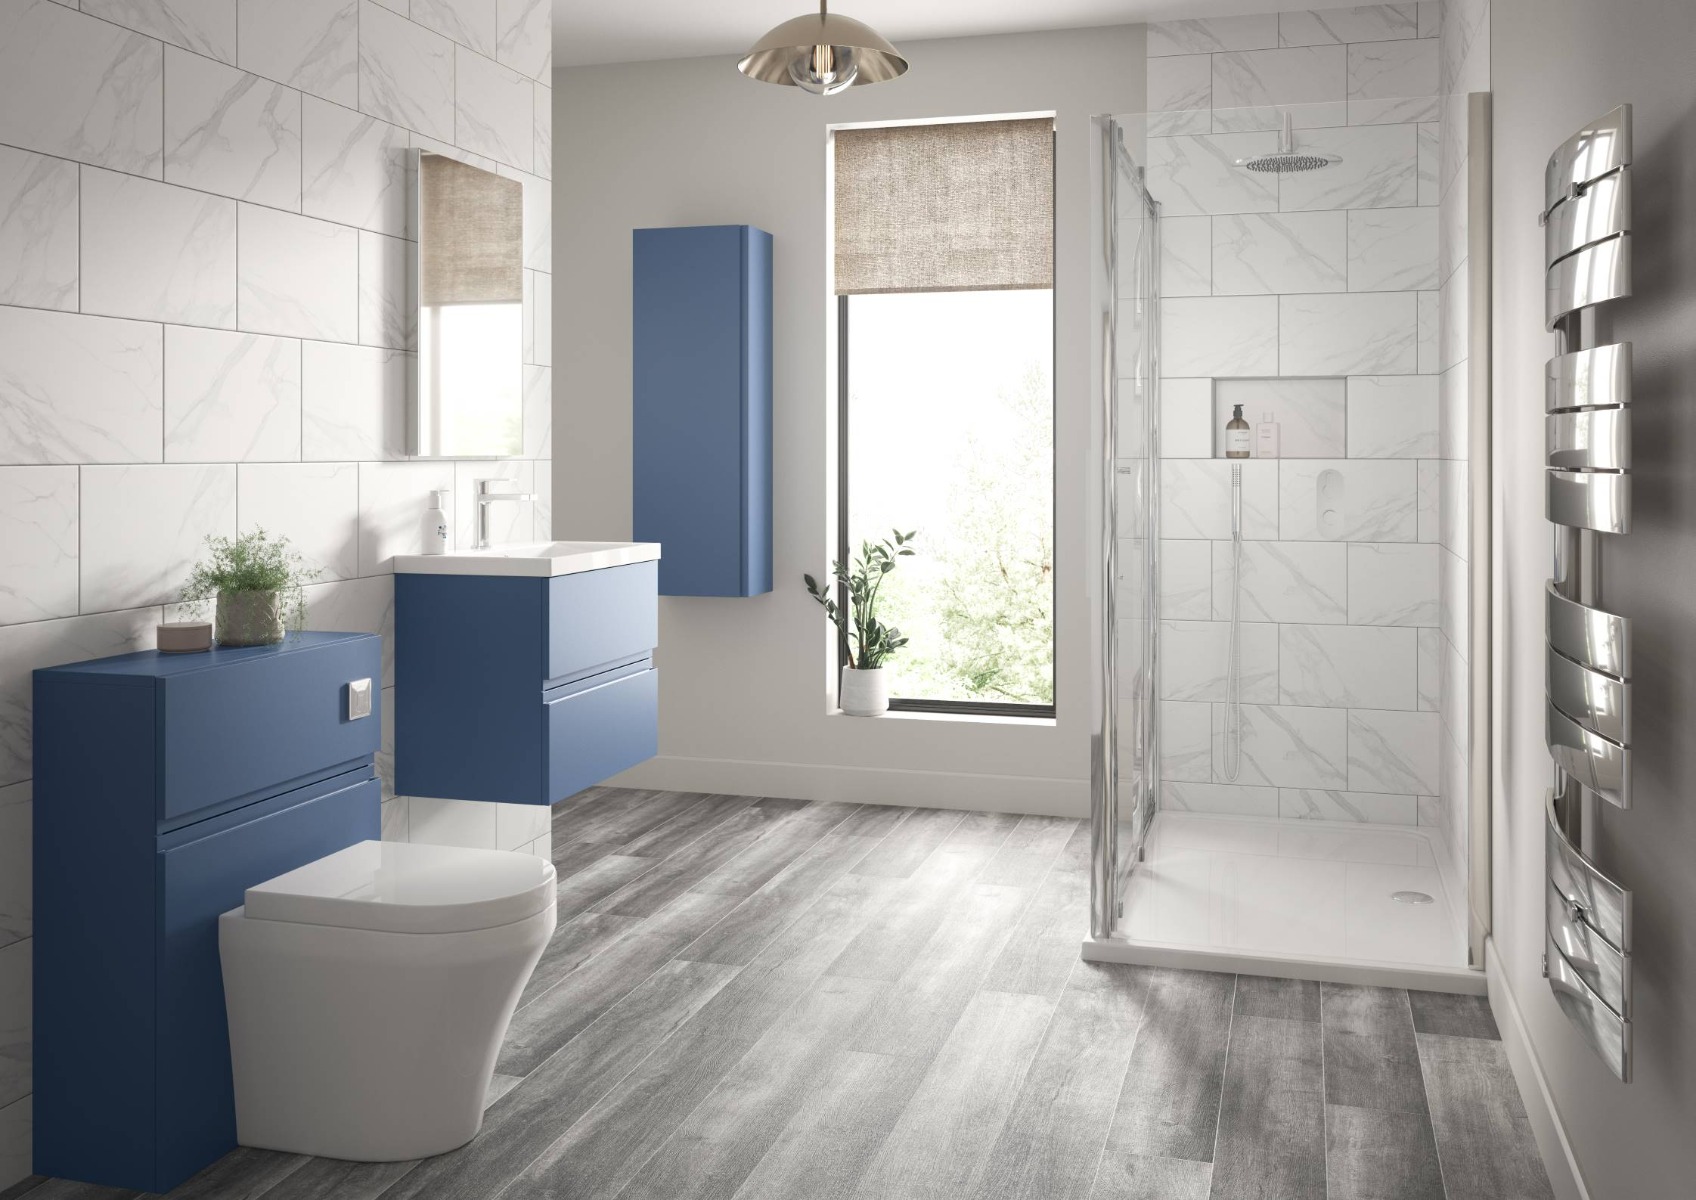 white, blue and grey bathroom design